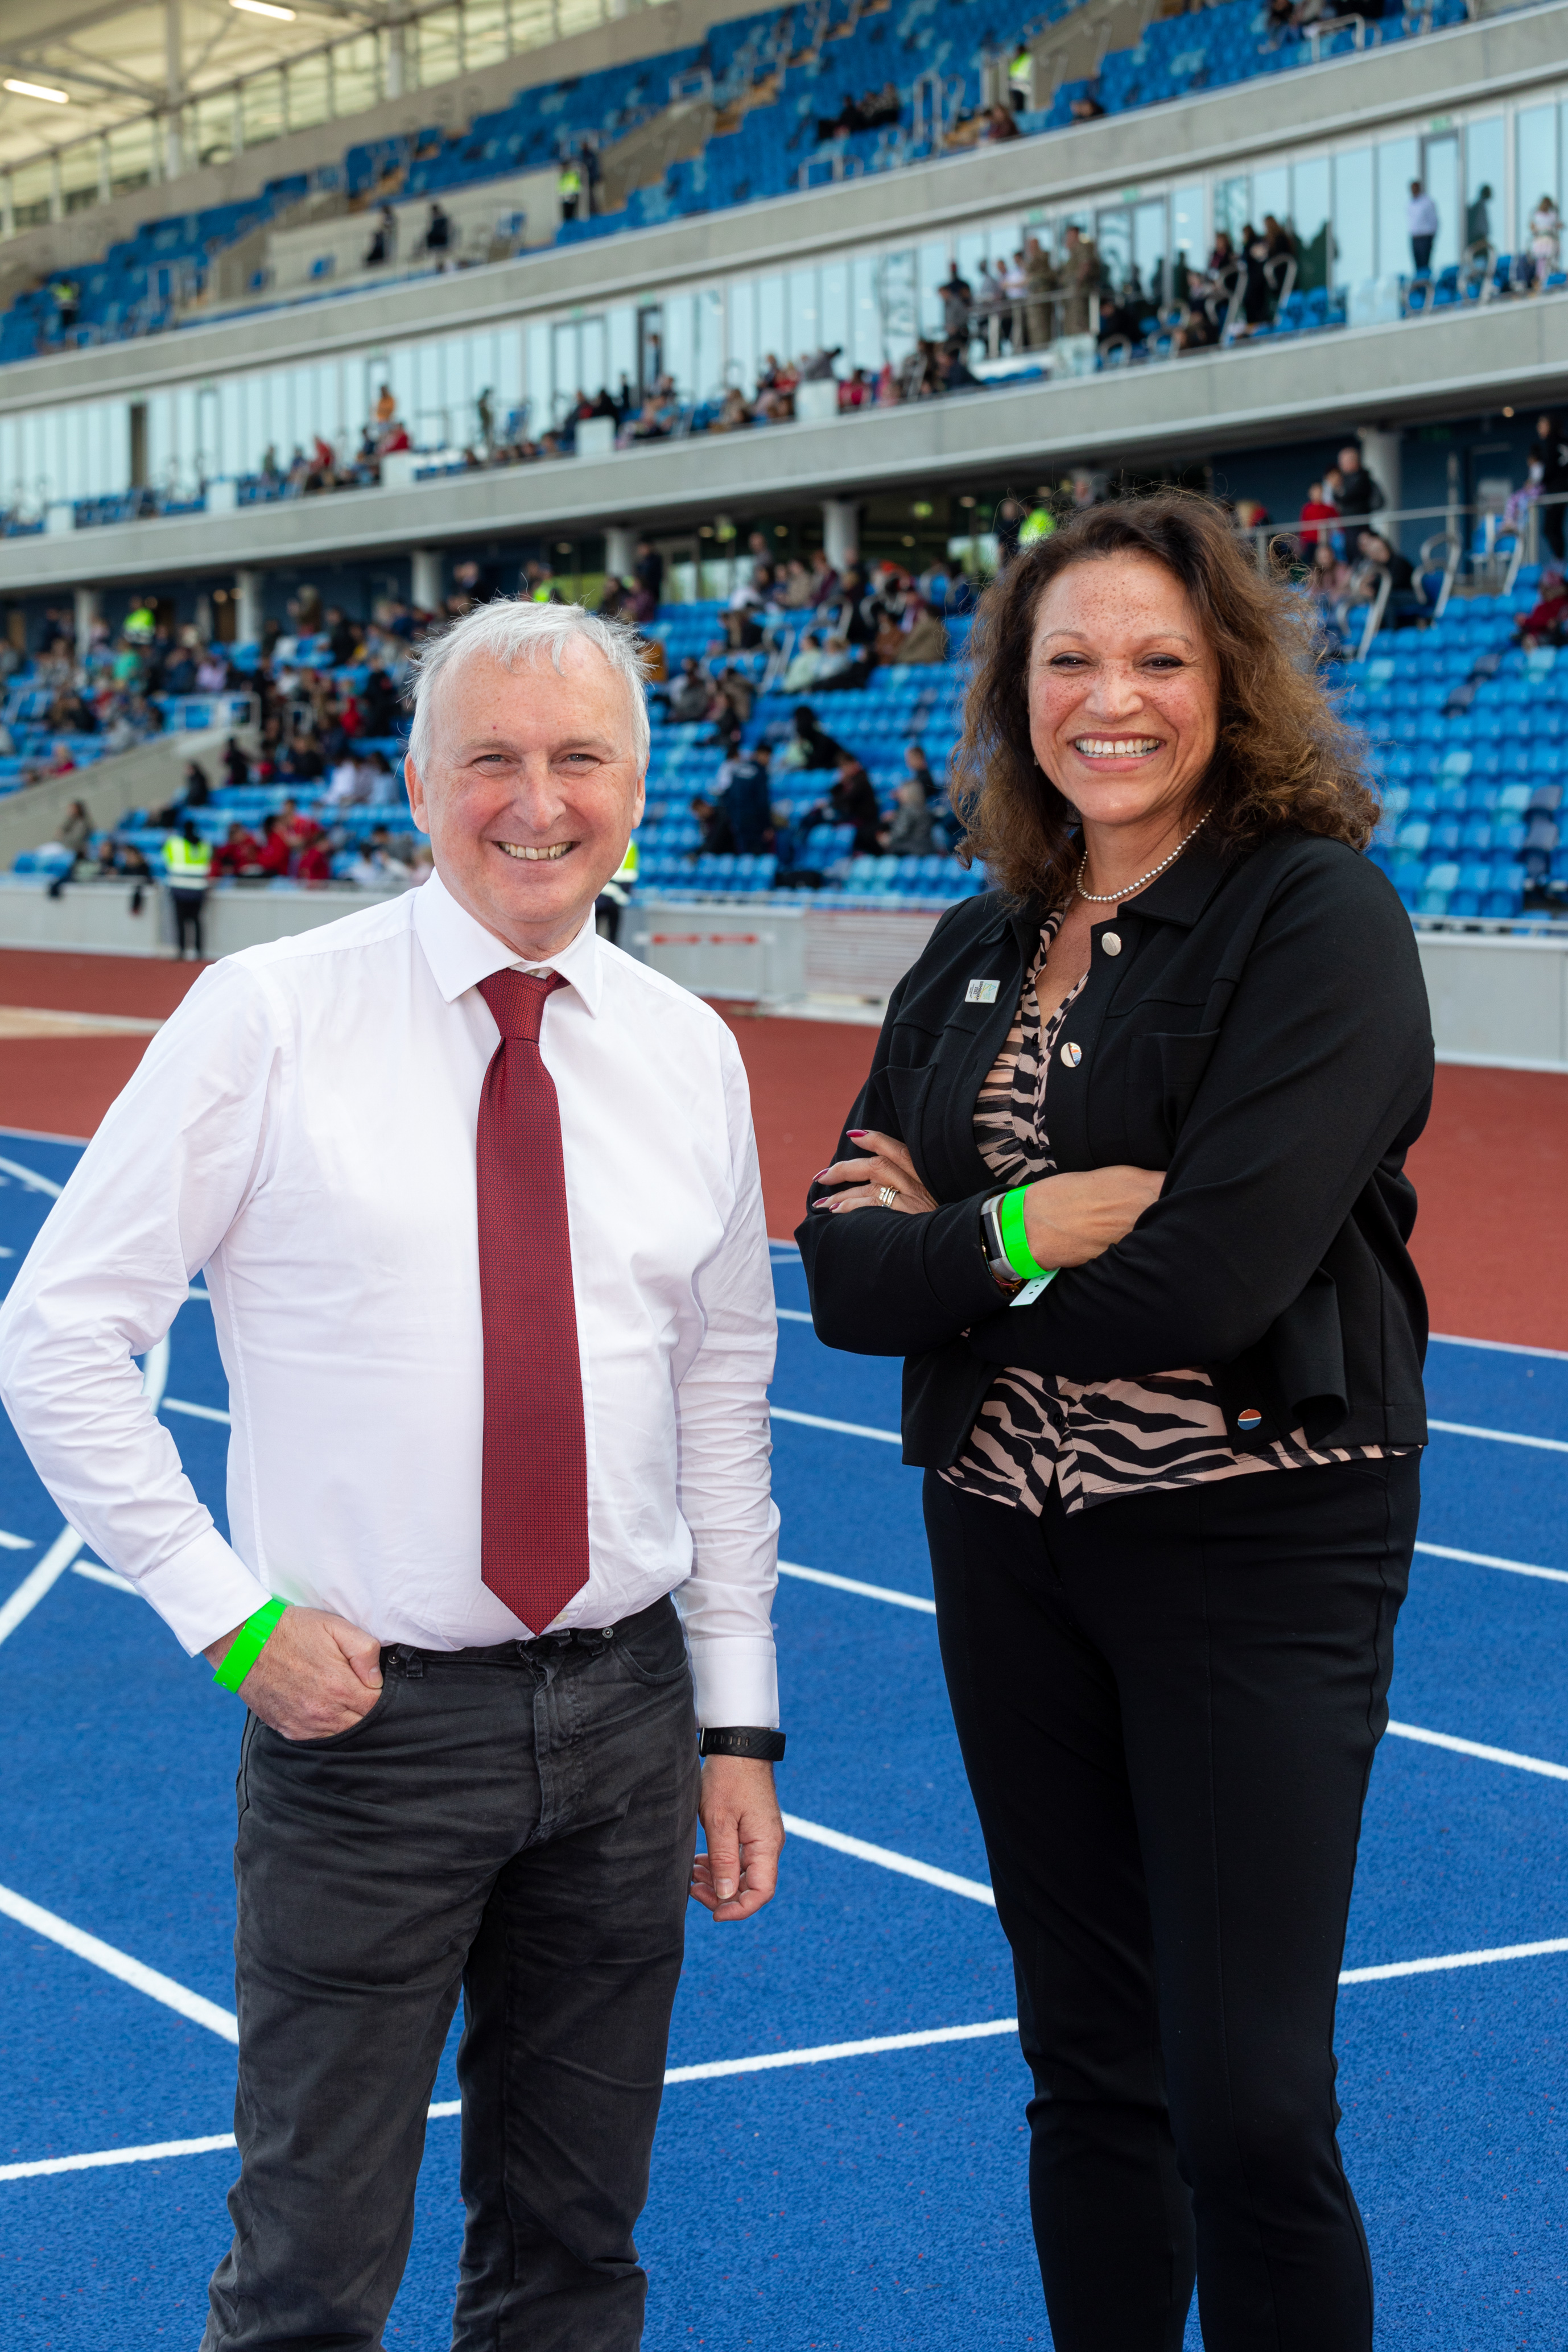 Cllr Ian Ward with chief executive Deborah Cadman at Alexander stadium